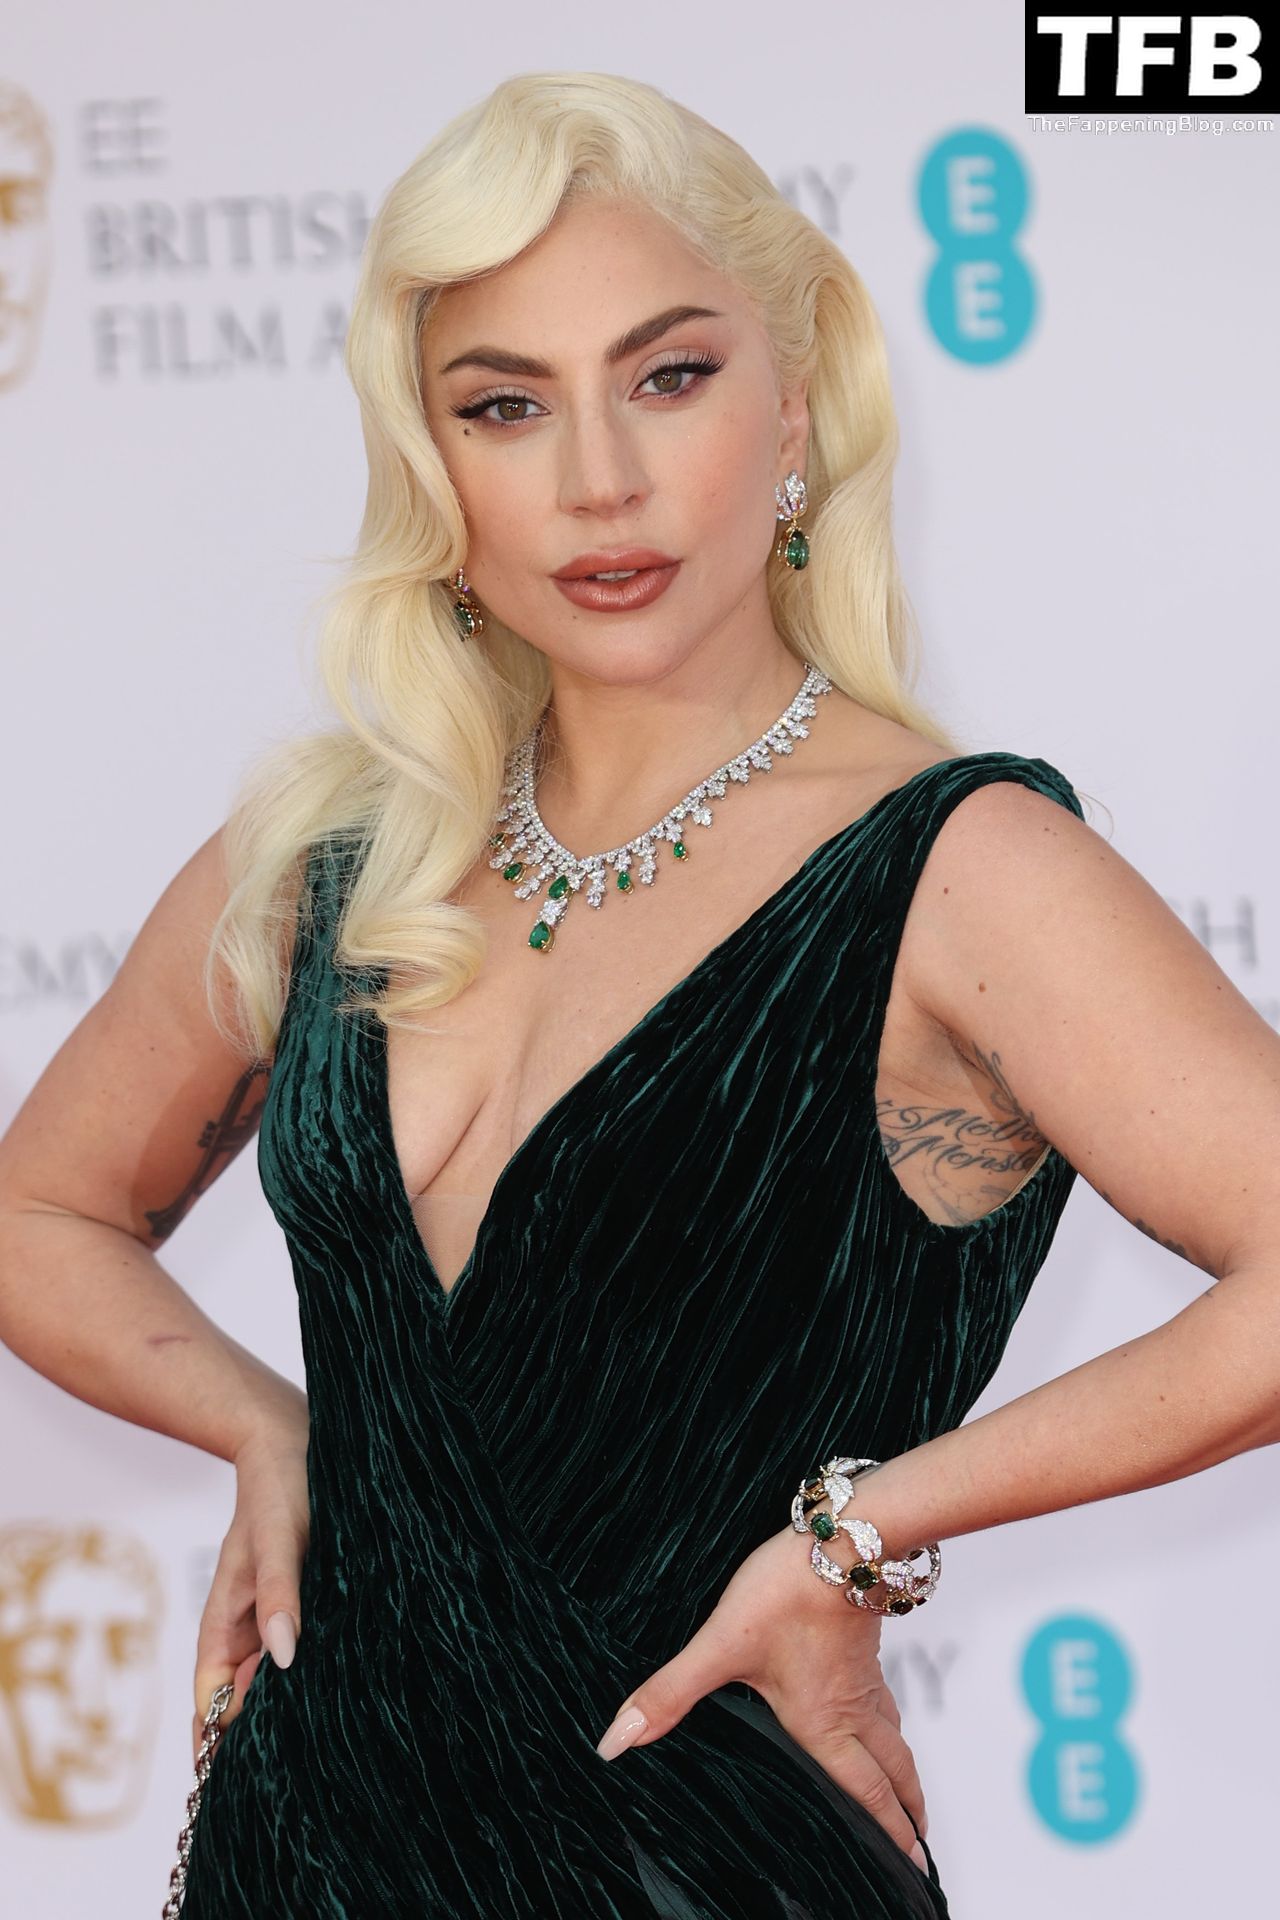 Lady-Gaga-Sexy-The-Fappening-Blog-17.jpg